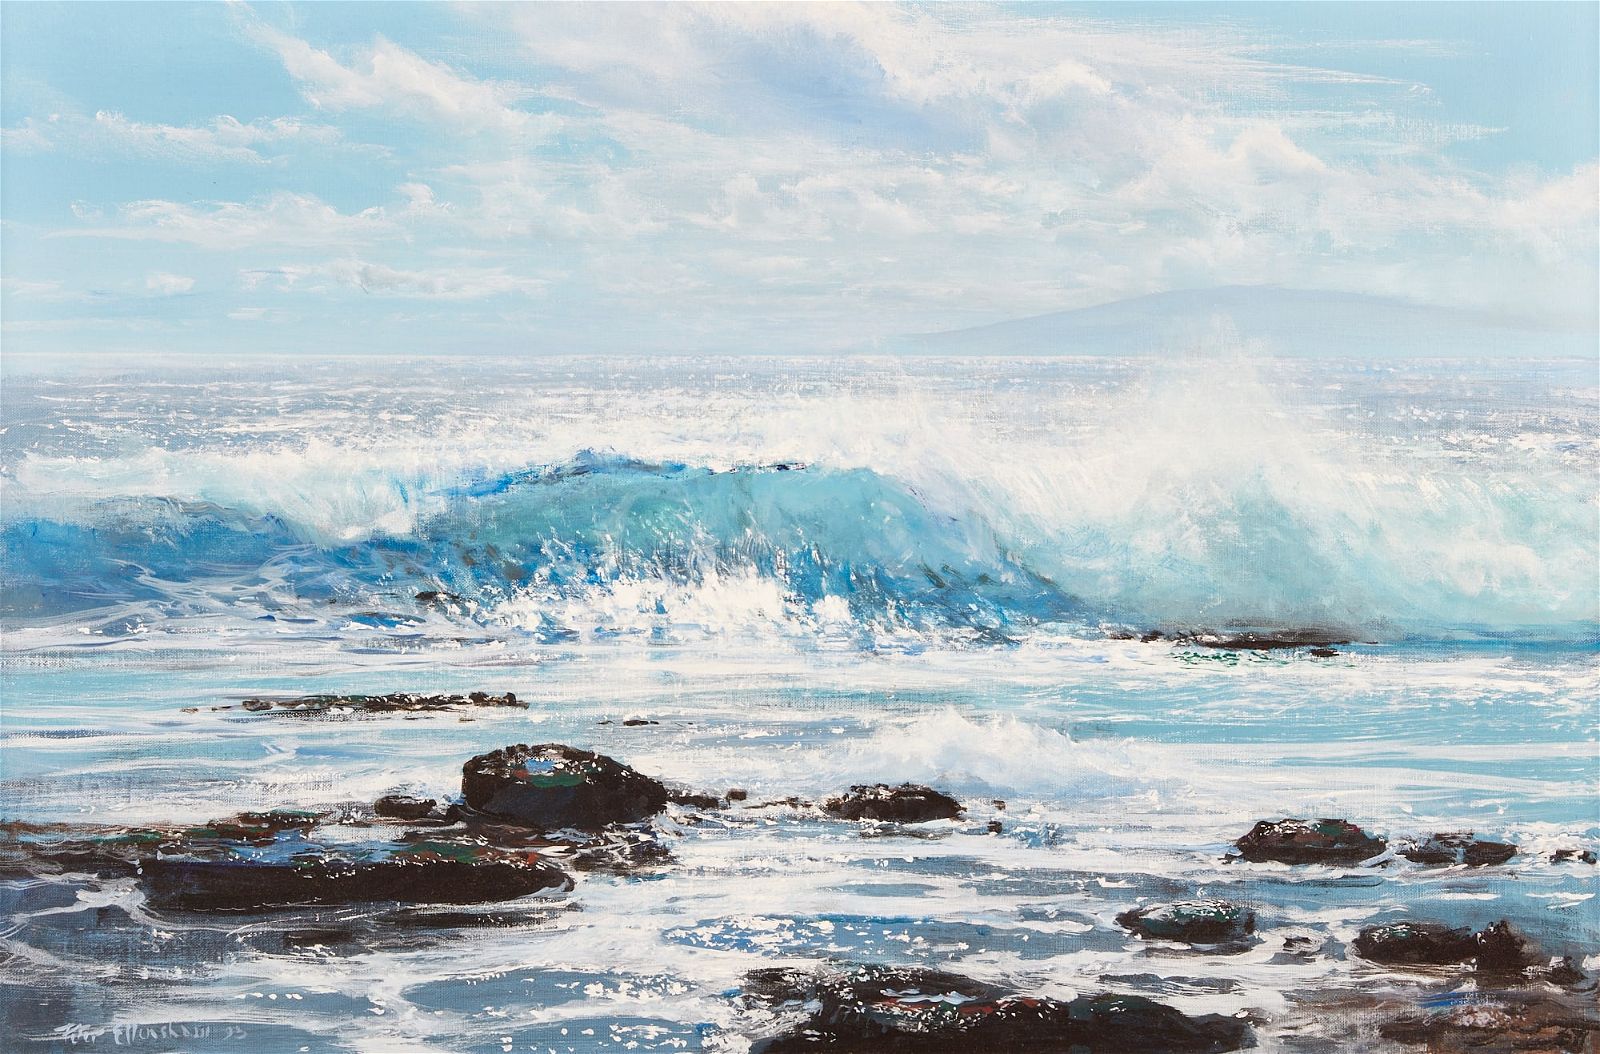 PETER ELLENSHAW, BLUE WAVE, HAWAIIPeter